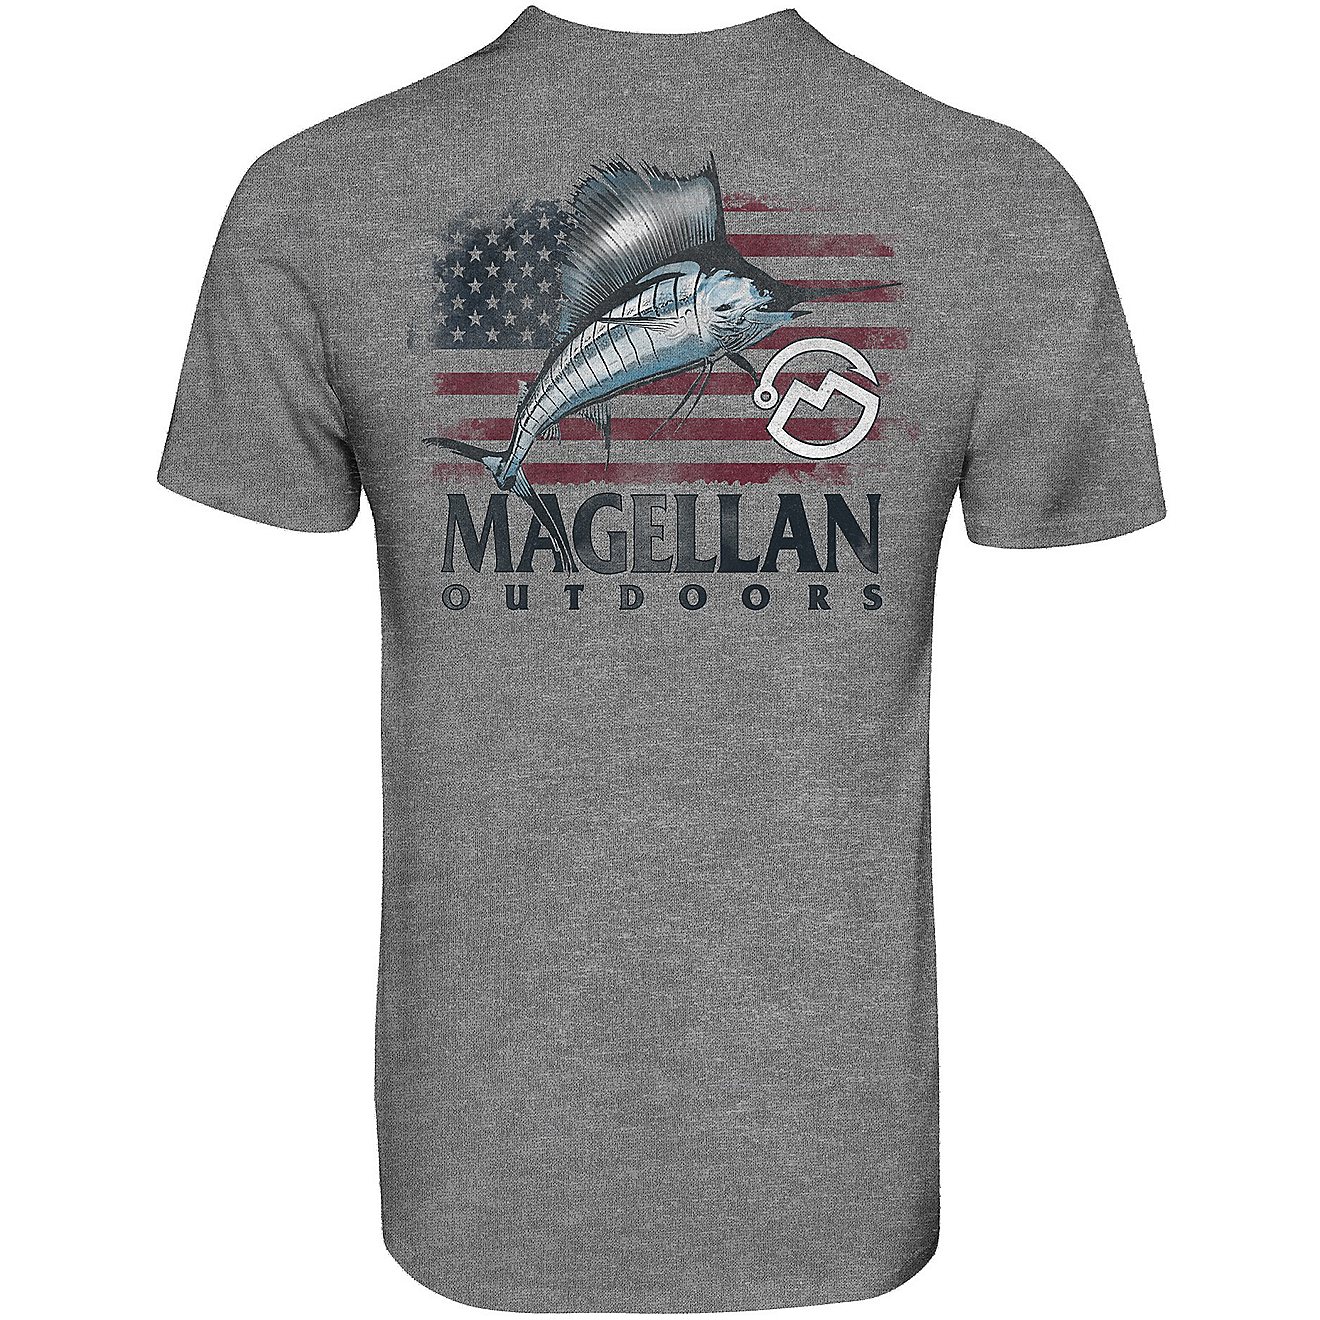 Magellan Outdoors Men's Sail Banner Graphic Short Sleeve T-shirt                                                                 - view number 1